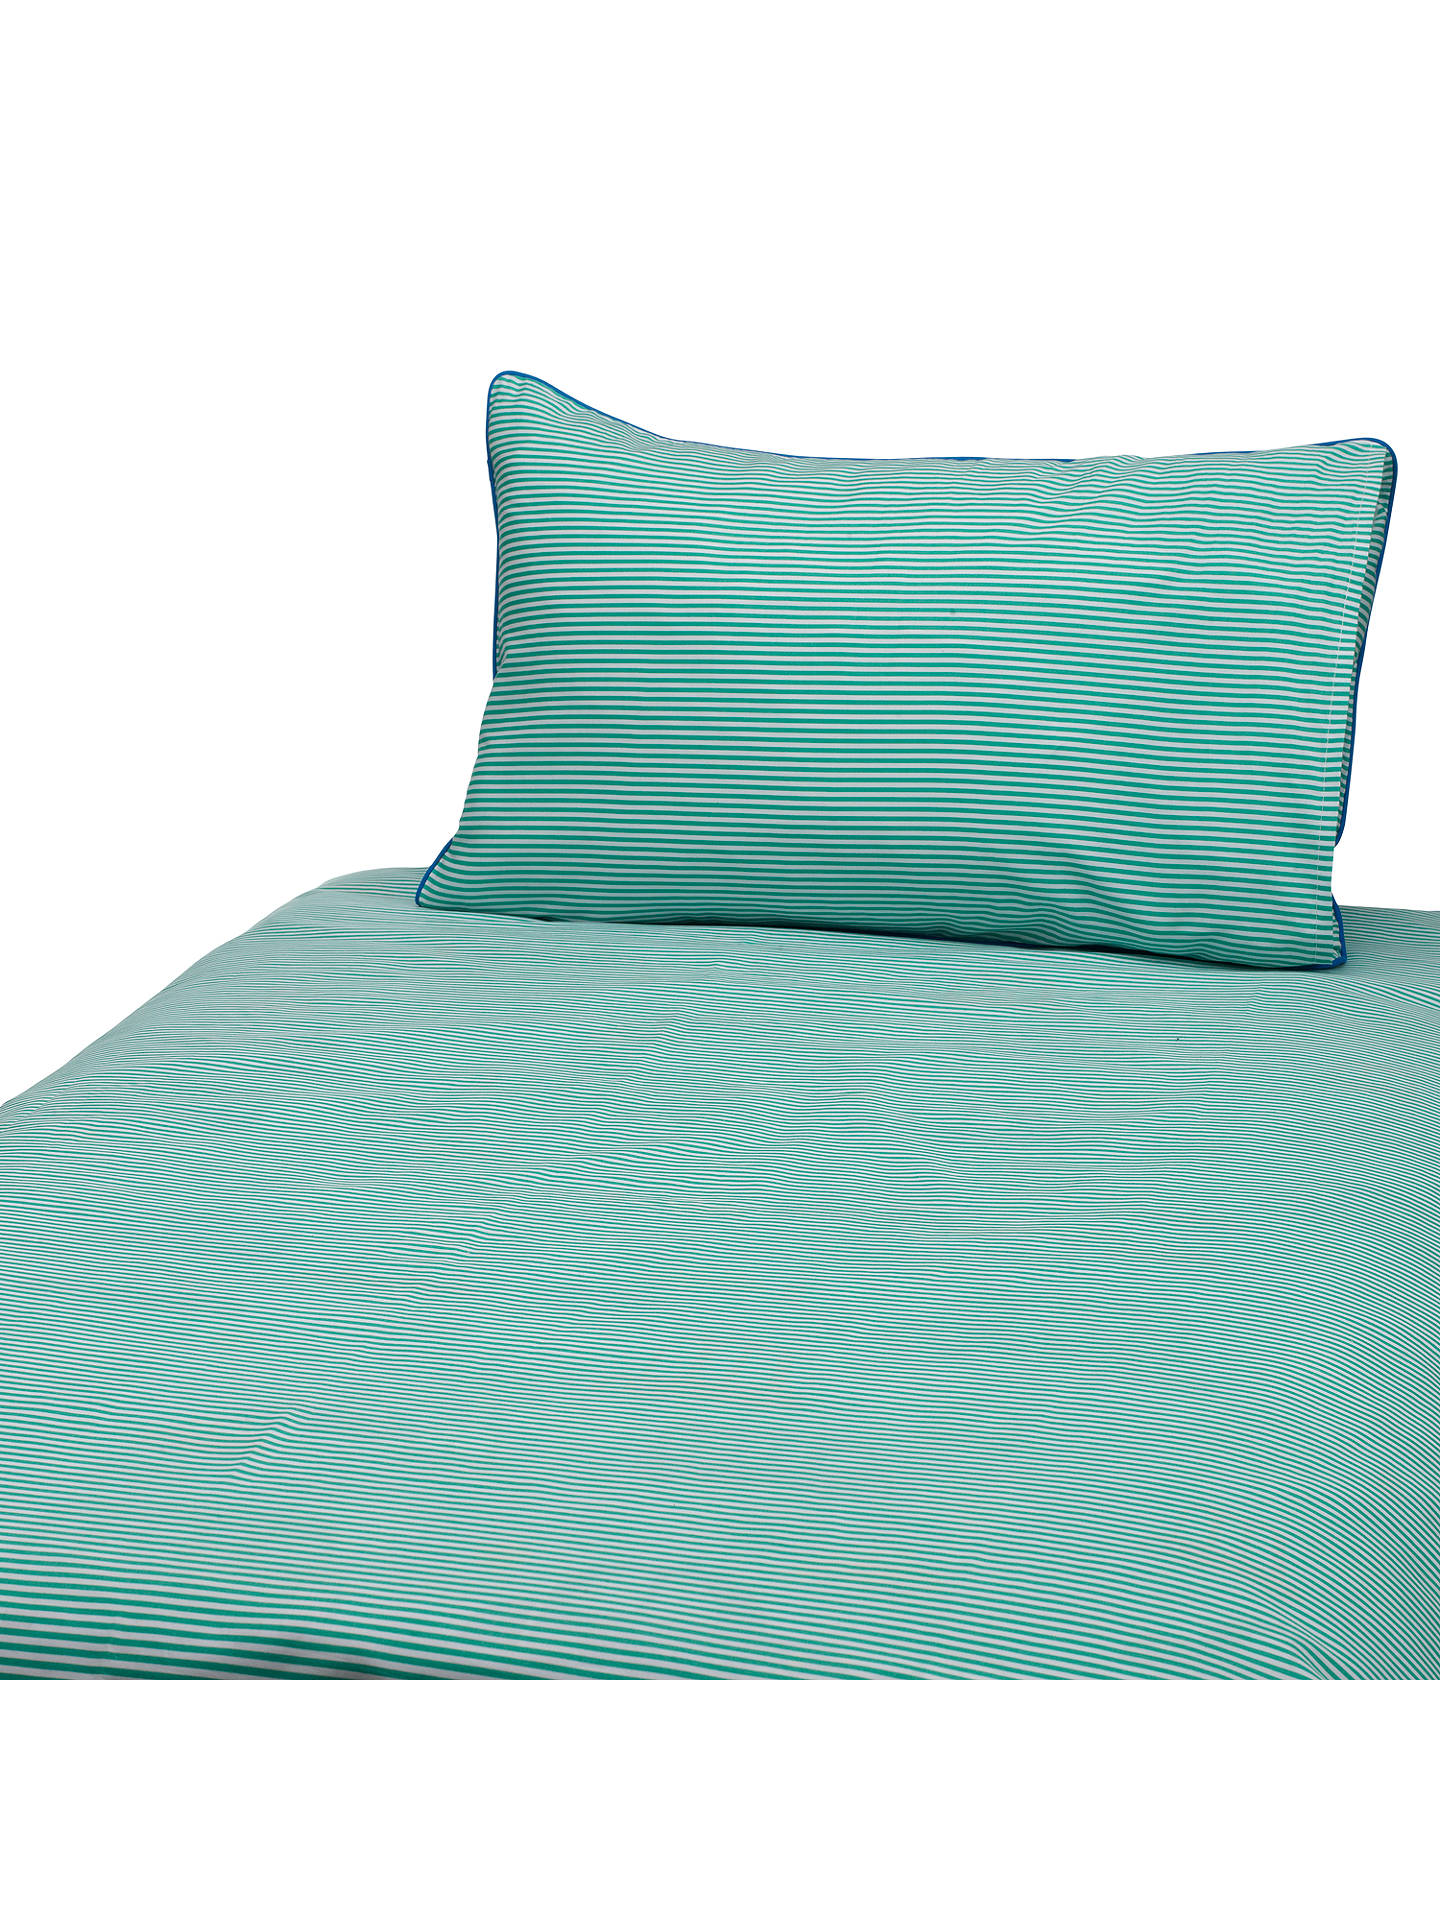 John Lewis Transport Cotbed Duvet Cover And Pillow Set Blue Multi